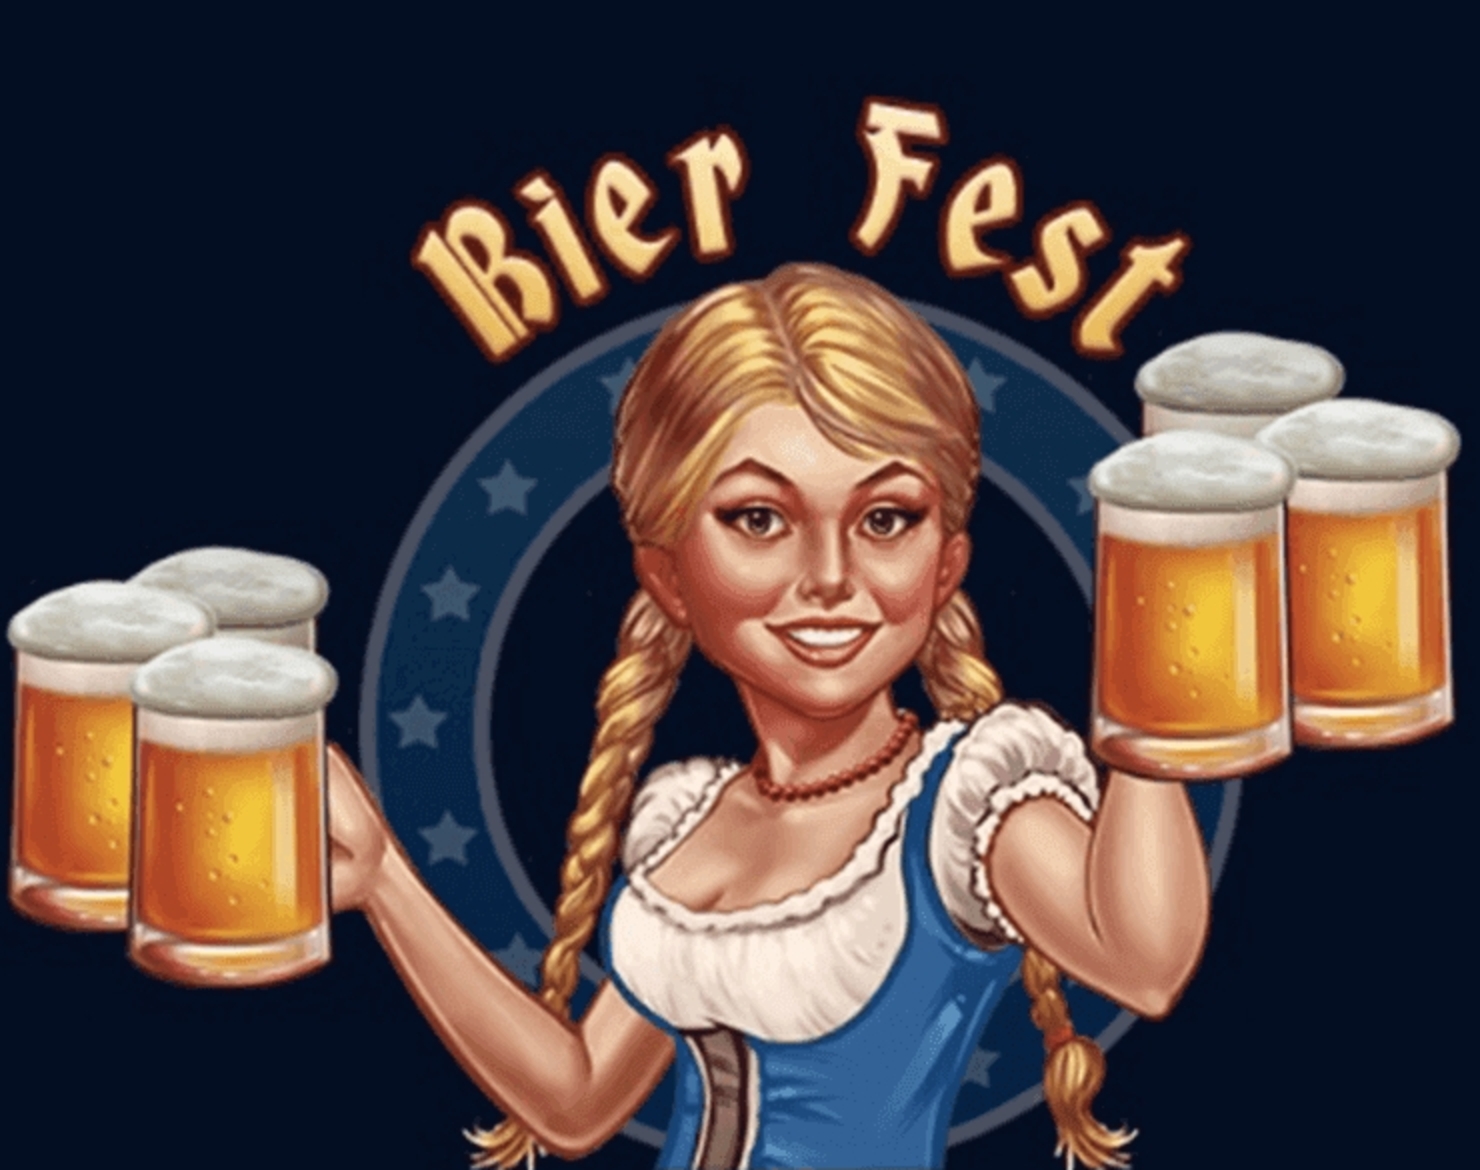 Bier Fest demo